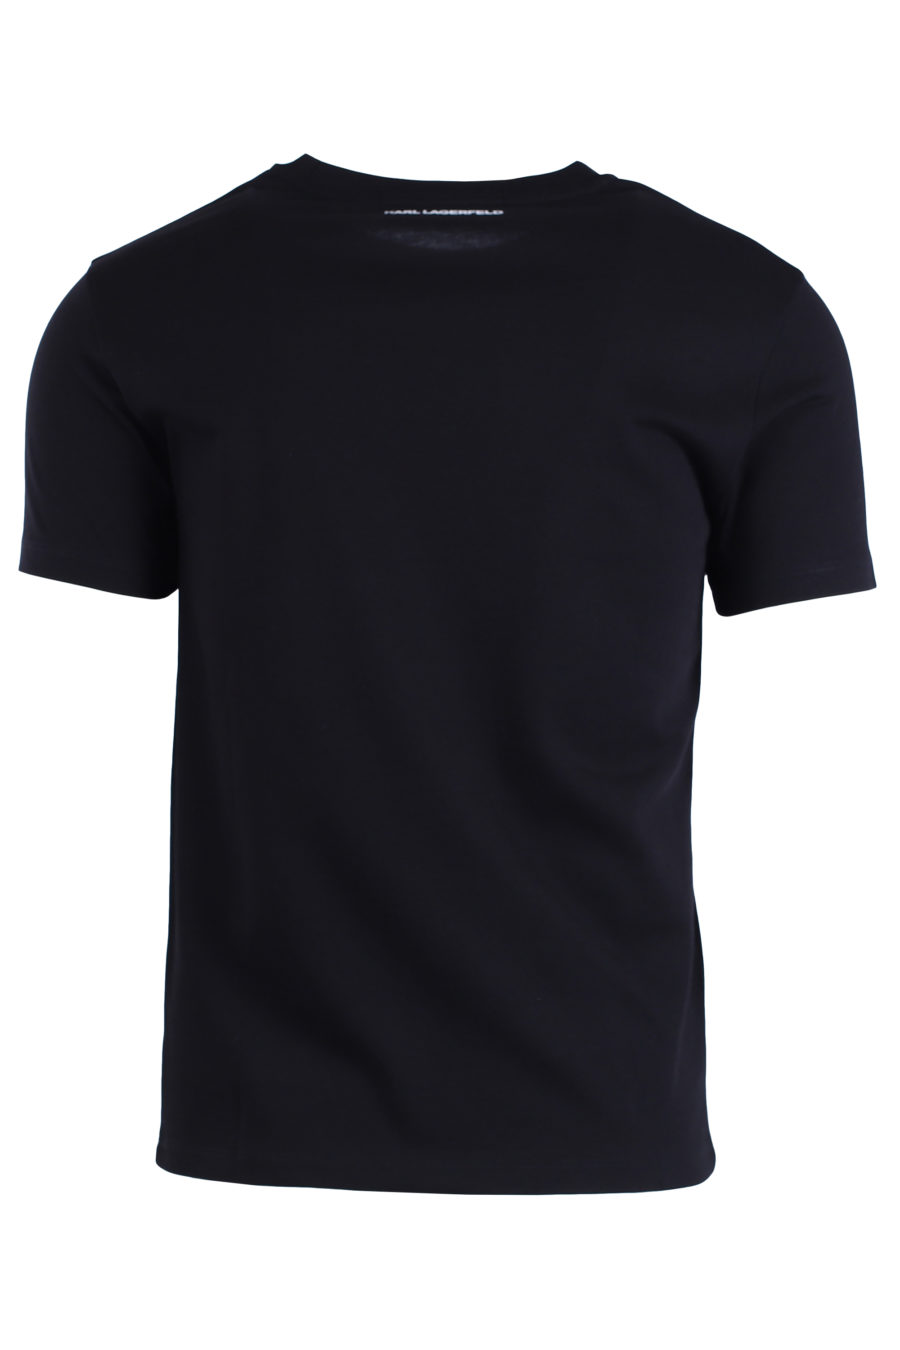 Camiseta unisex negra con logo - IMG 9059